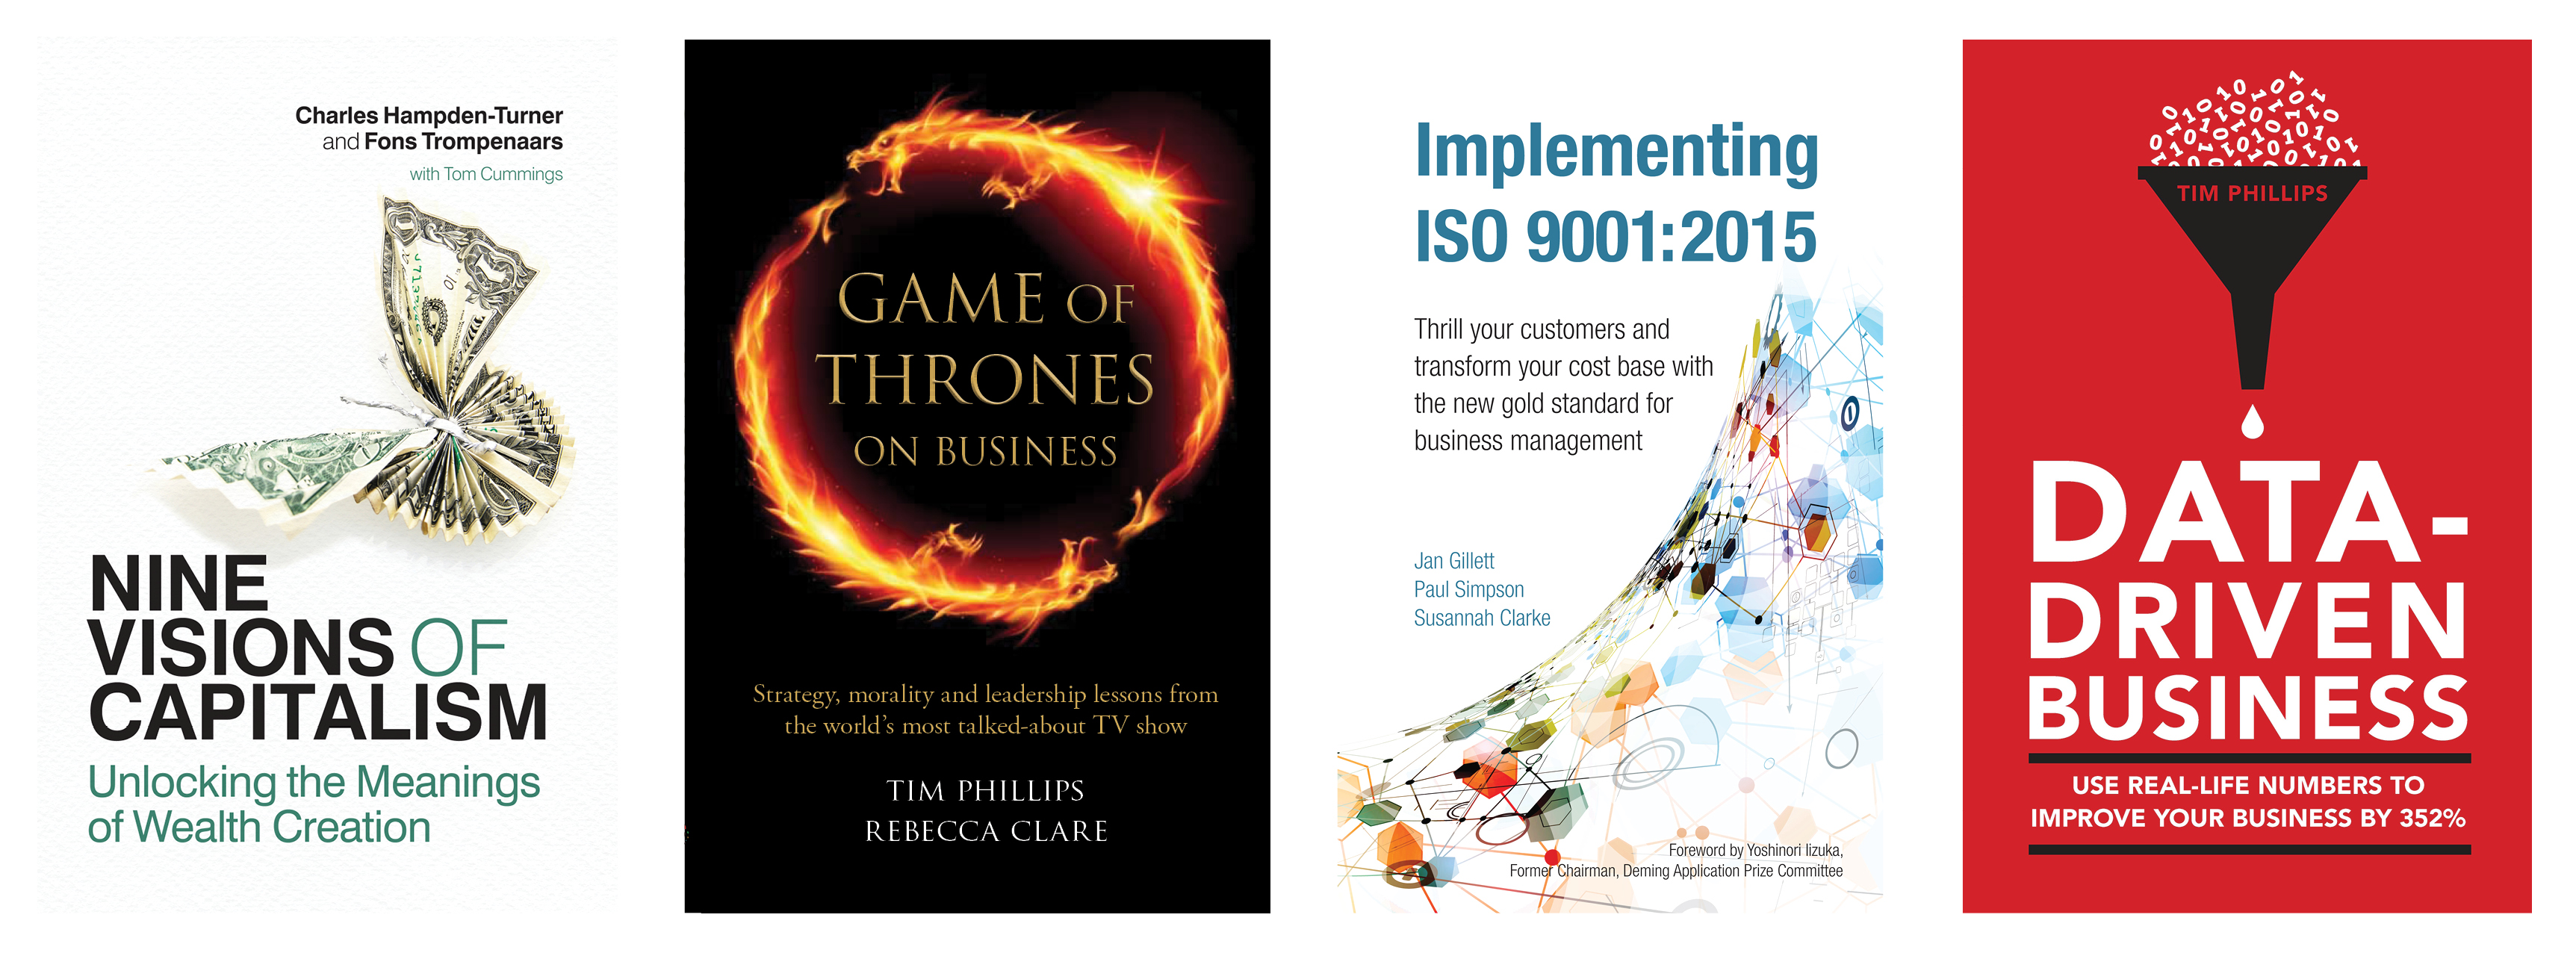 Business books image website